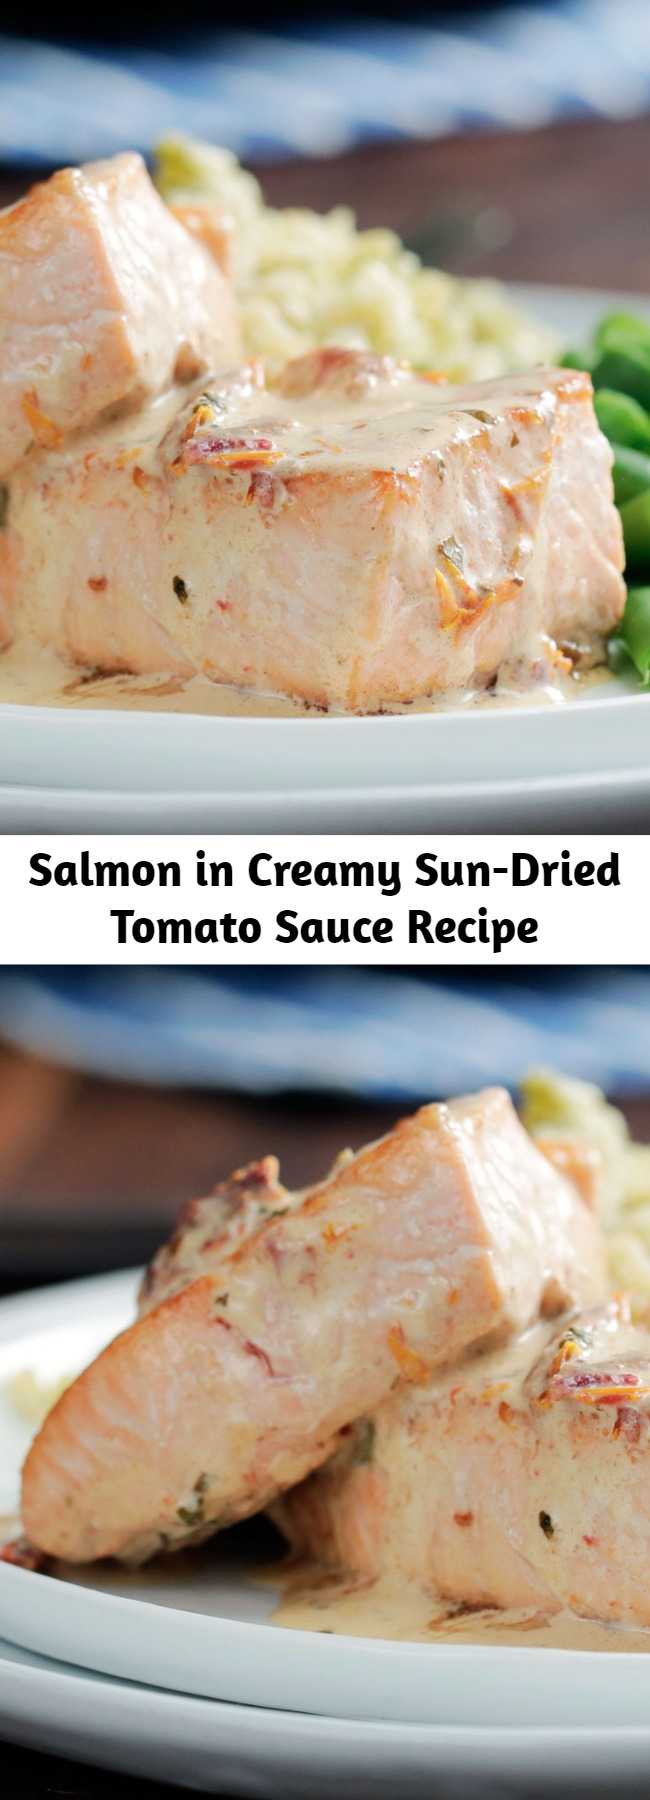 Salmon in Creamy Sun-Dried Tomato Sauce Recipe - Layer on the flavor with a creamy sun-dried tomato sauce over lightly seasoned sauteed salmon.